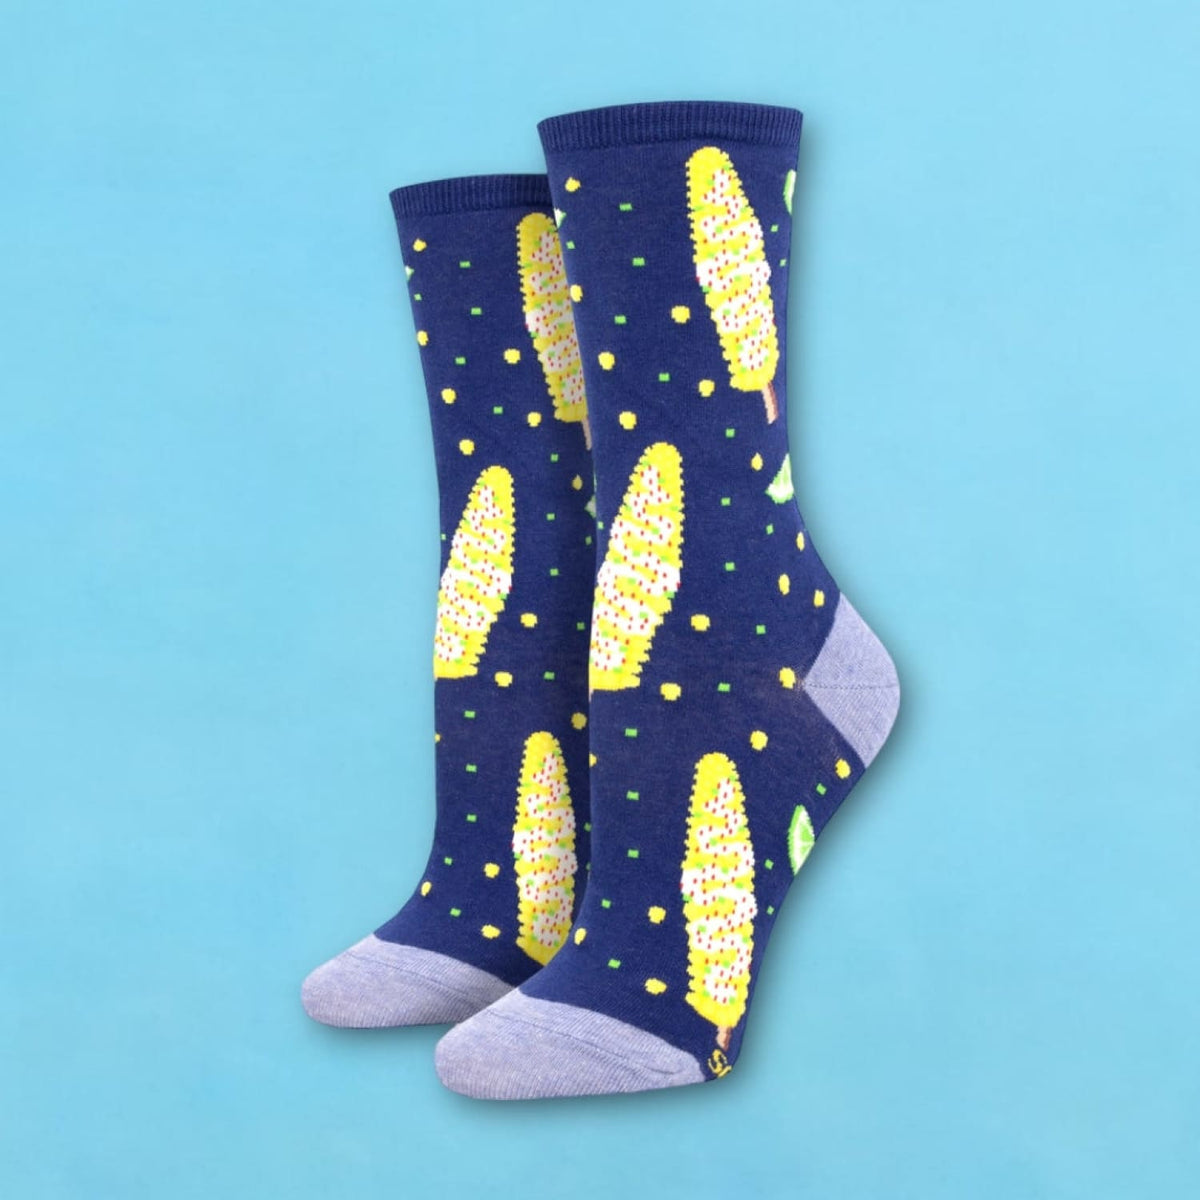 Socksmith Socks Women’s Elote Navy Groupbycolor - Novelty